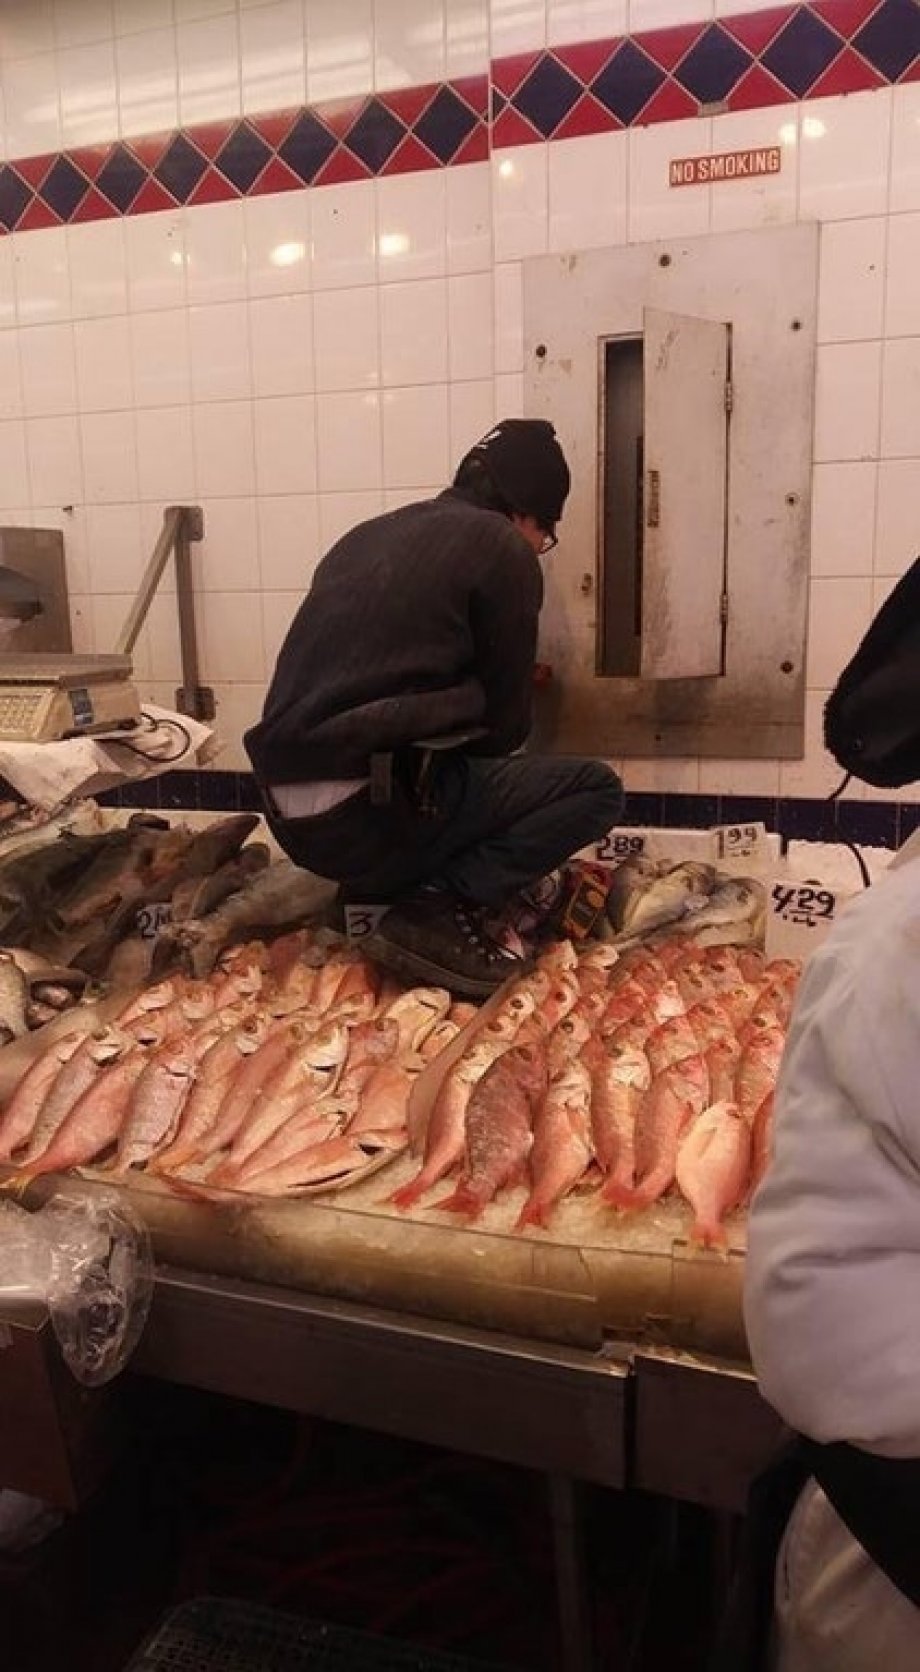 man steps on fish in chinatown - No Smoking 439